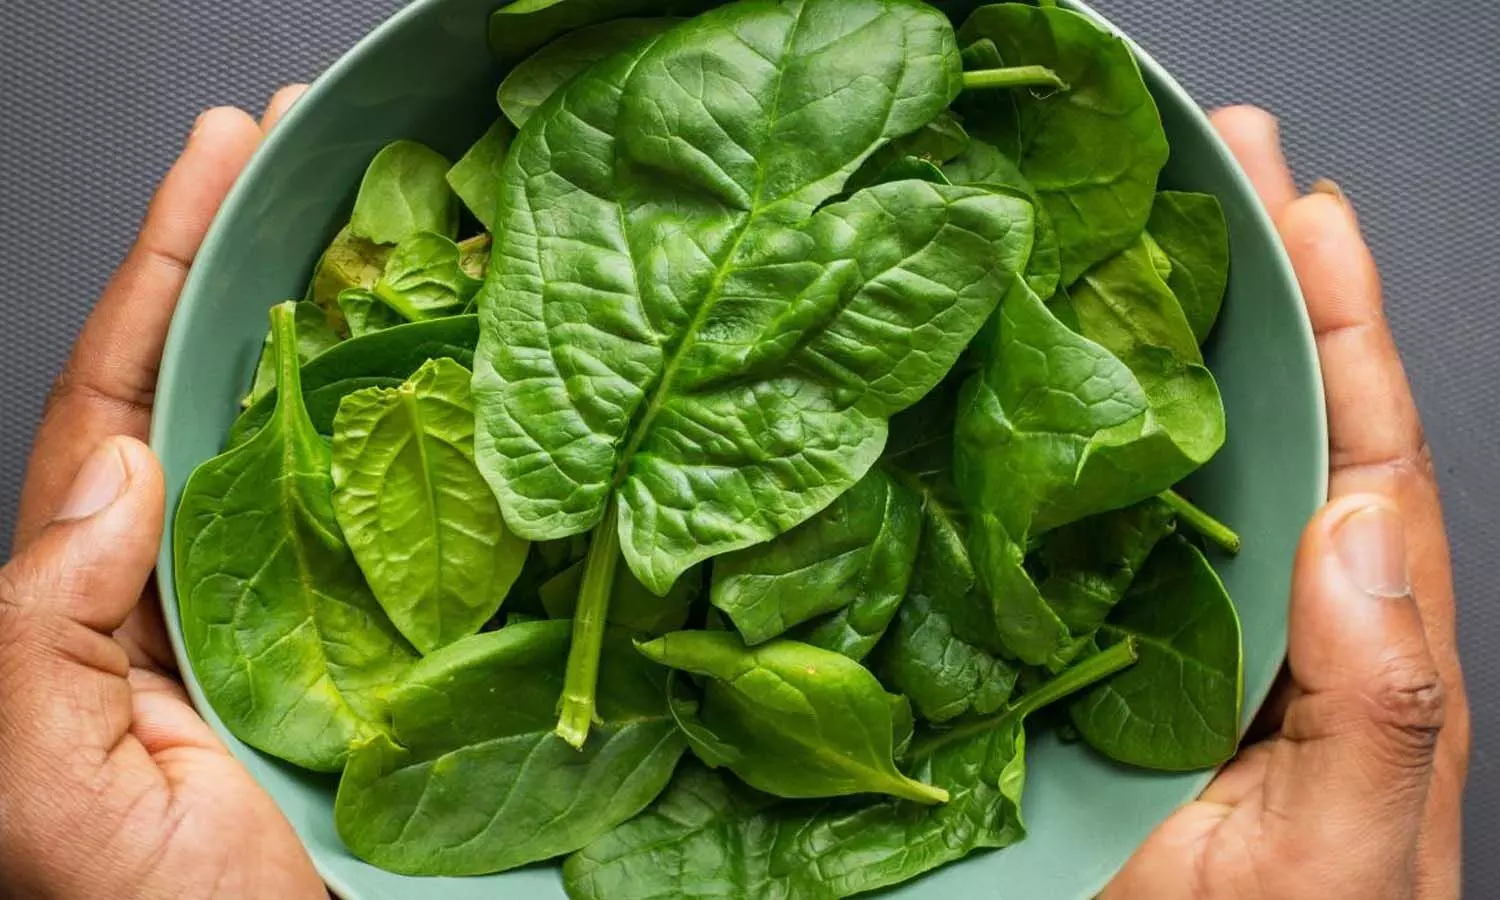 Benefits of Green Leafy Vegetables